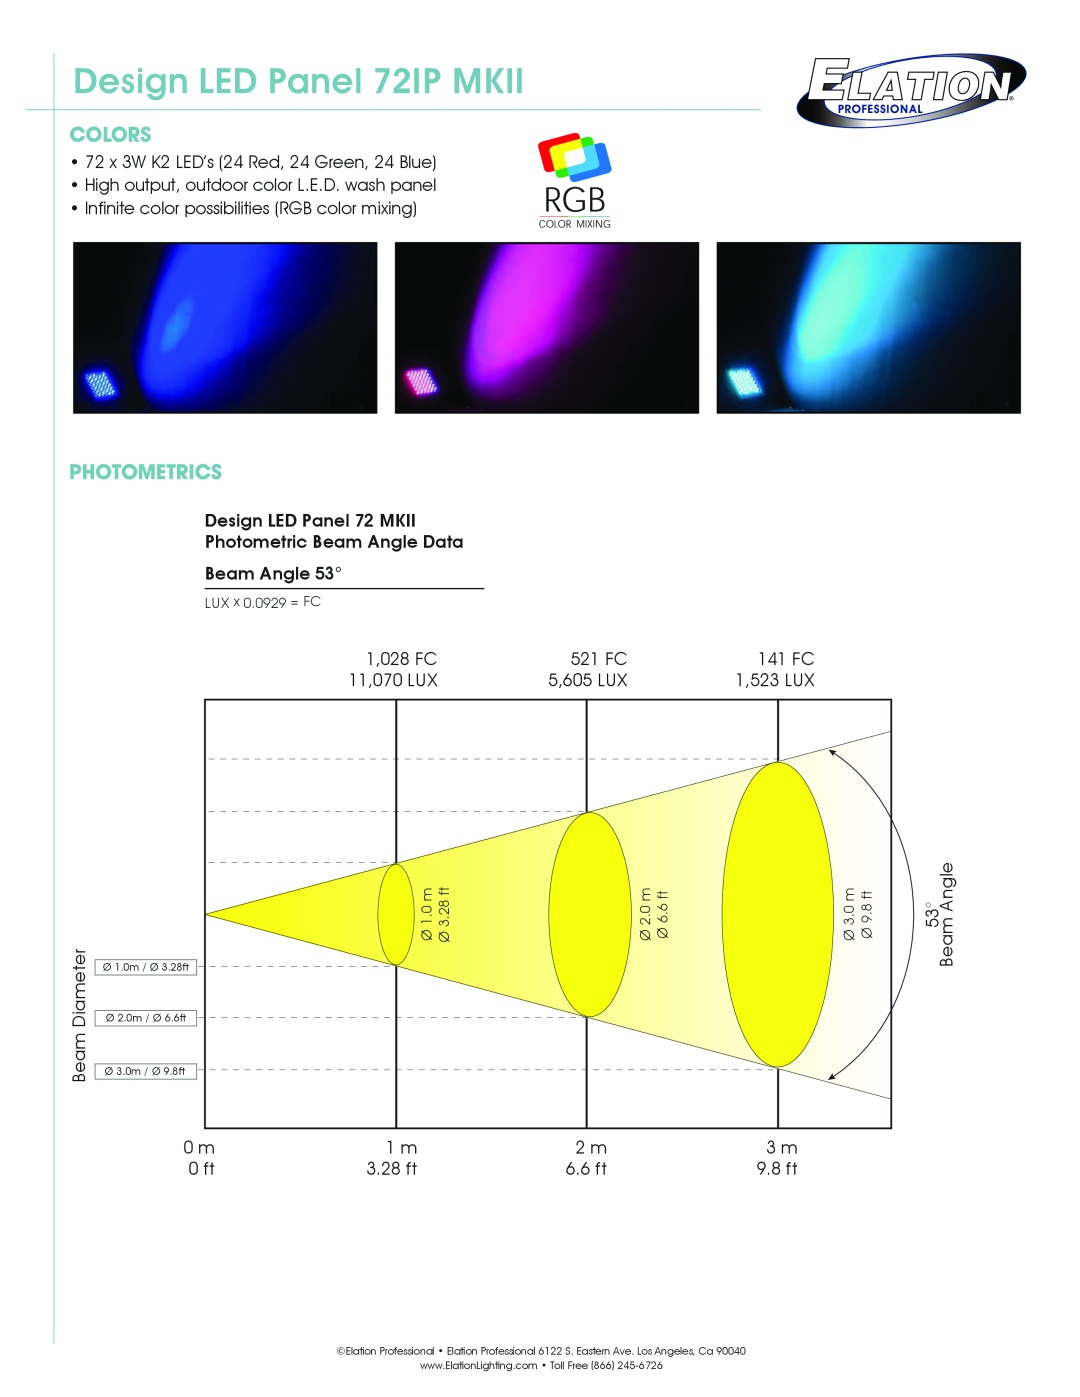 Elation Professional Colors, Photometrics, Design LED Panel 72IP MKII, LUX x 0.0929 = FC, Ø 1.0 m Ø 3.28 ft 